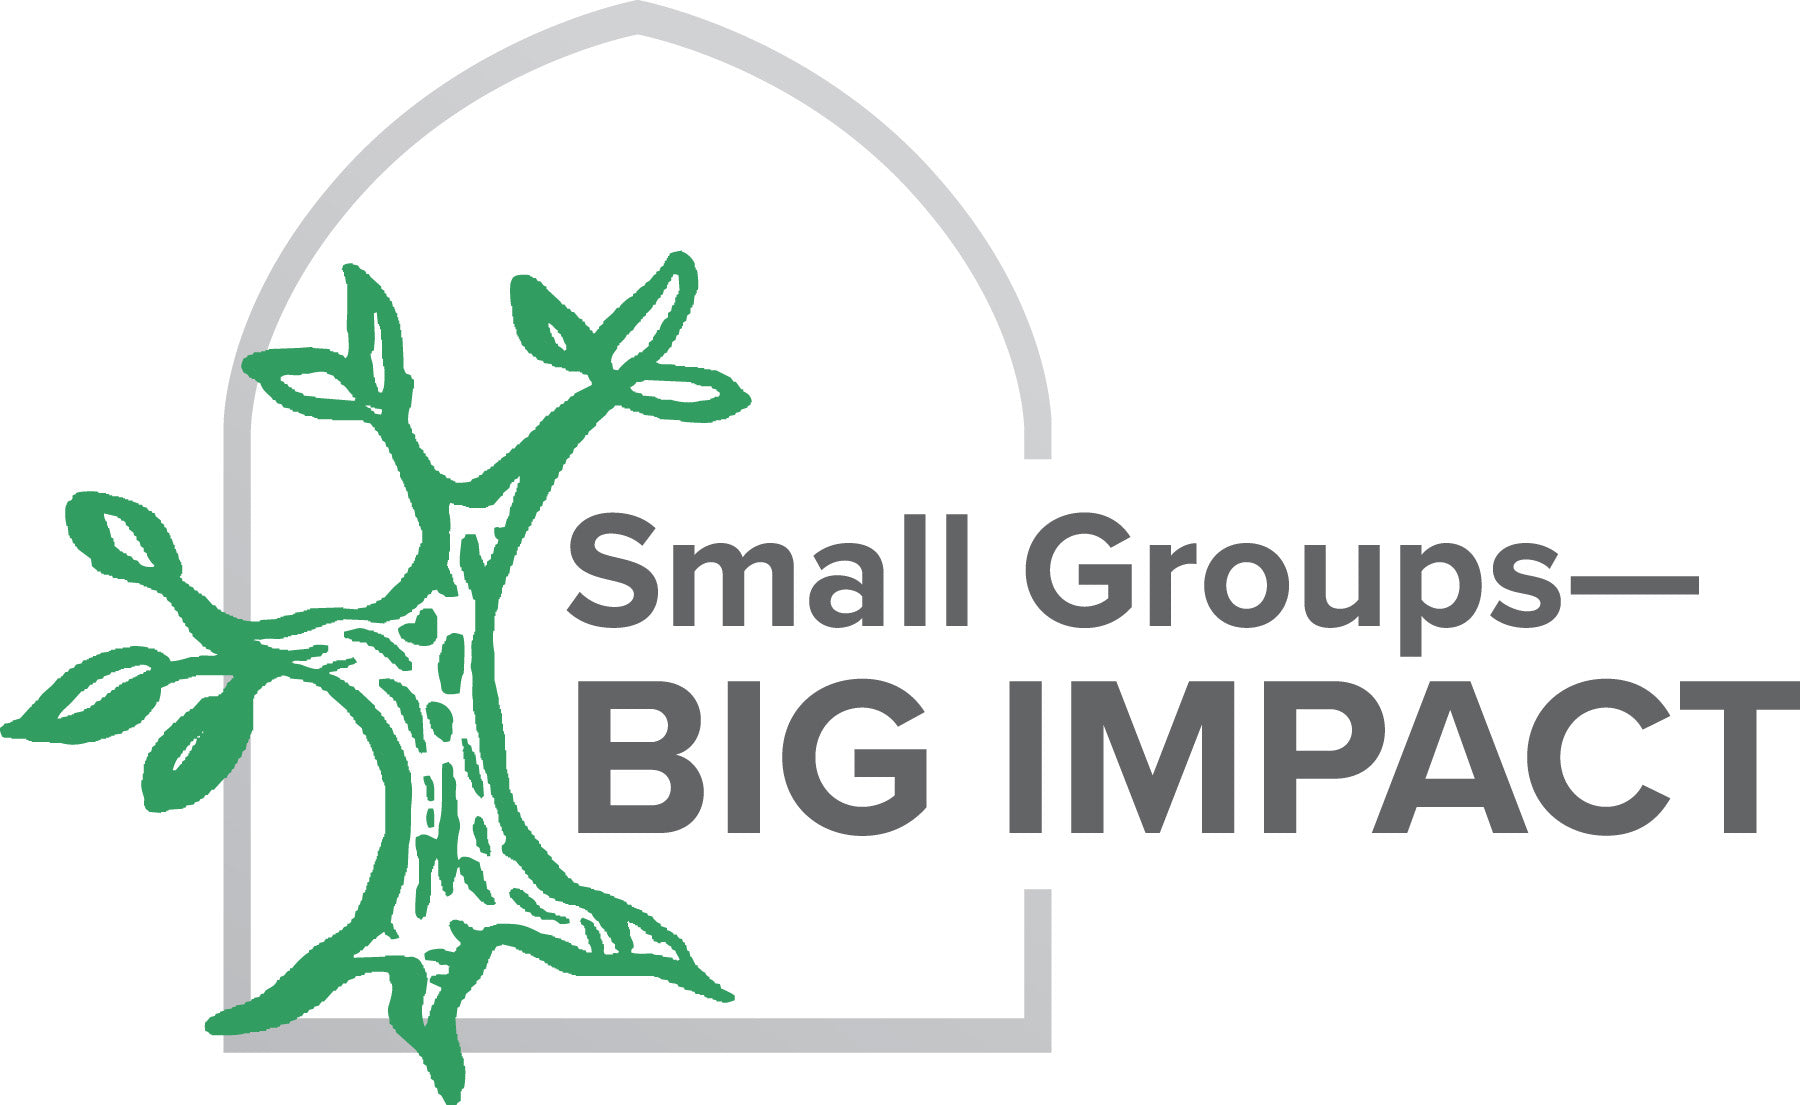 Small Groups—Big Impact